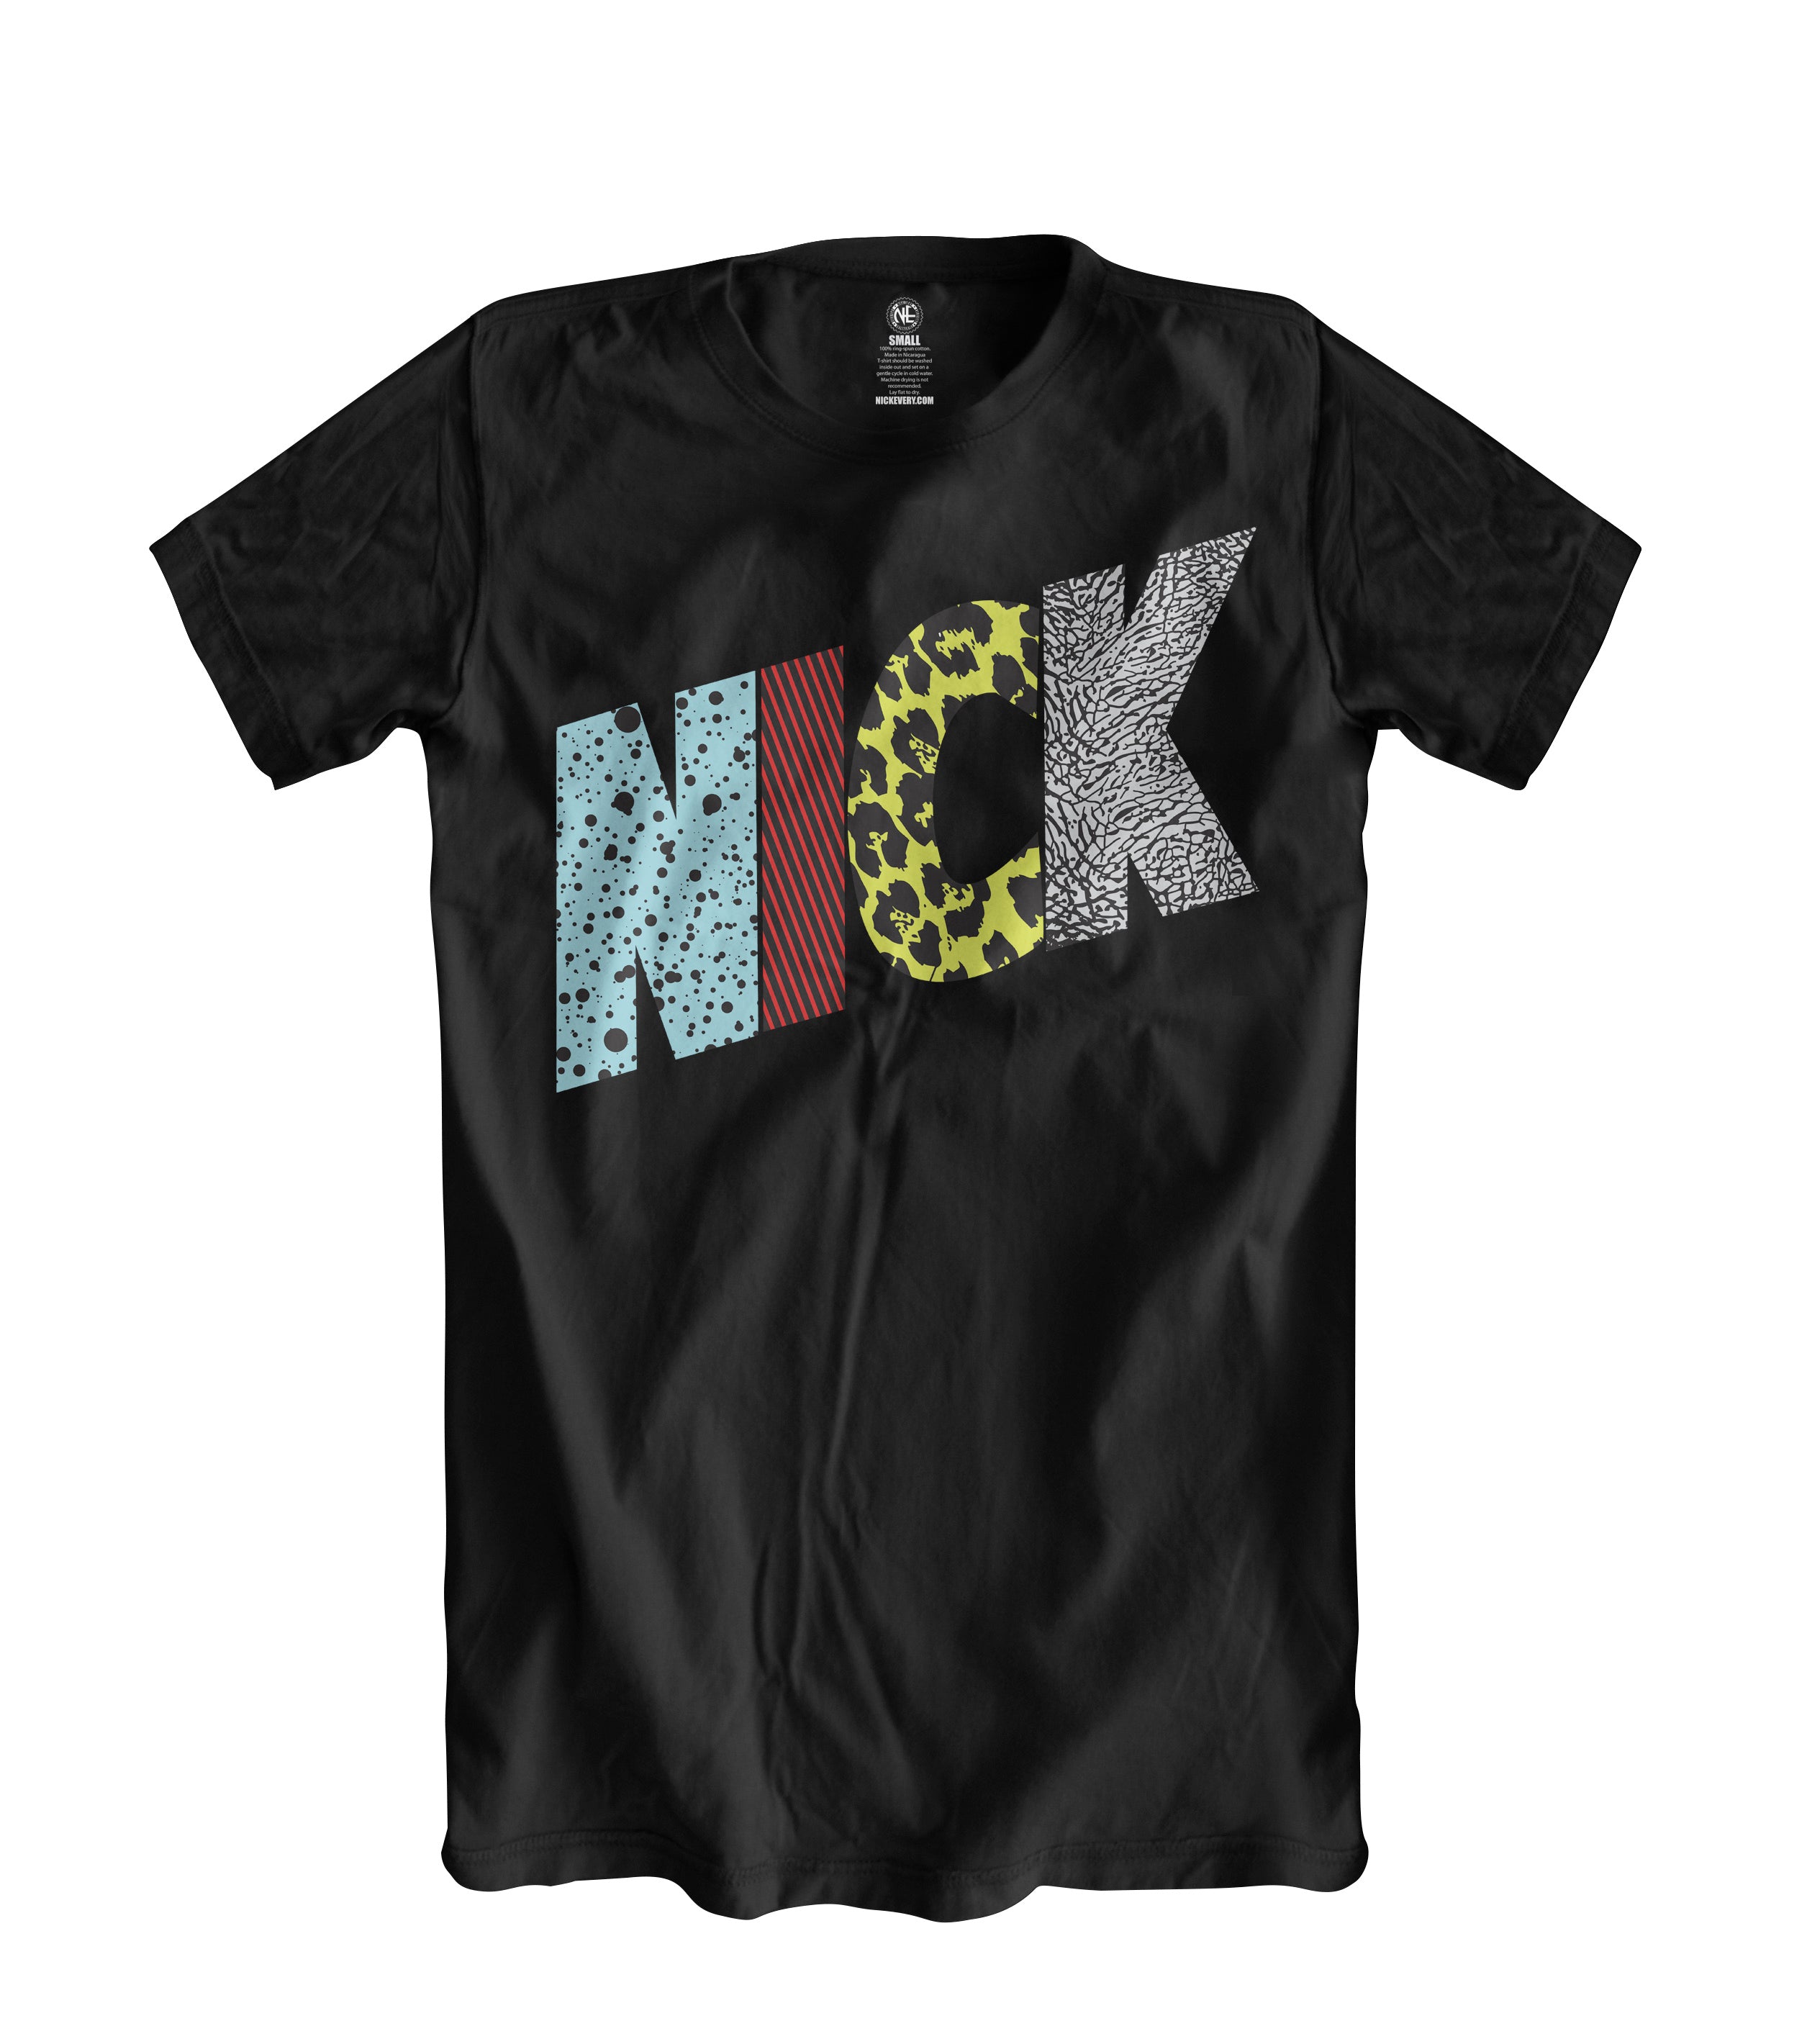 NICK Black T-shirt (Snkrprint Multi Color)